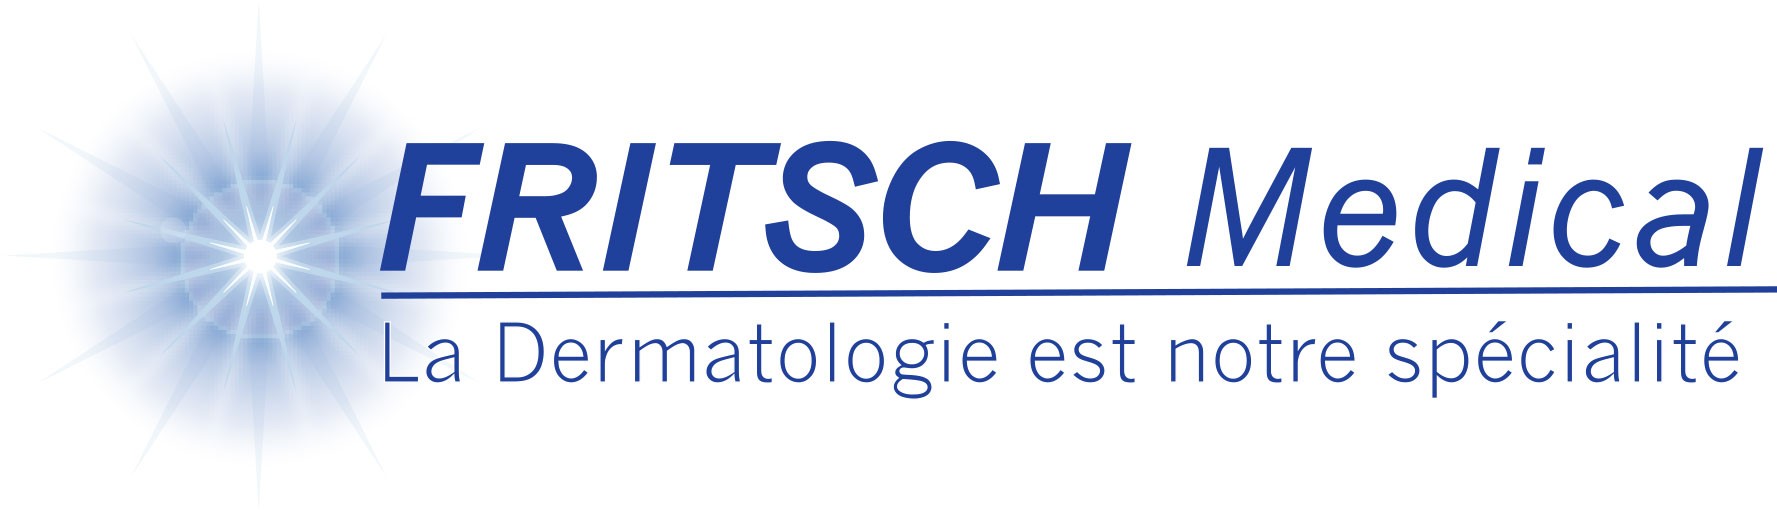 fritsch-medical-logo-1606833633